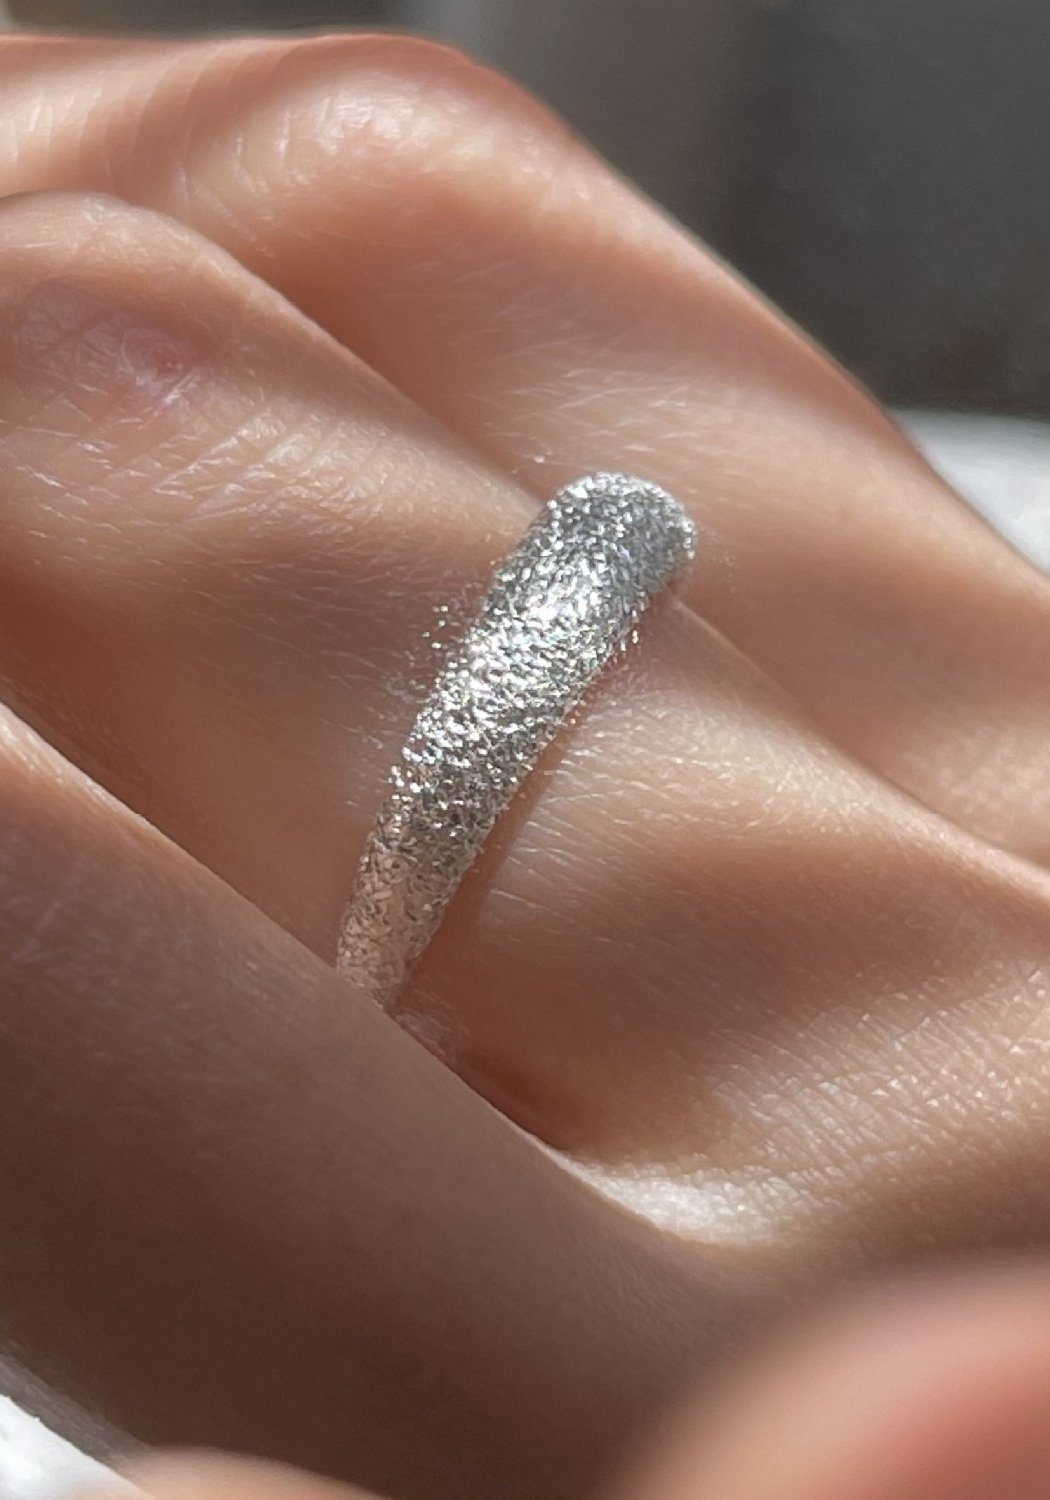 Color Design Fingerring Damen Ringe SMK-32, 925 Silber Ring mit Zirkonia, inkl. Geschenkbeutel